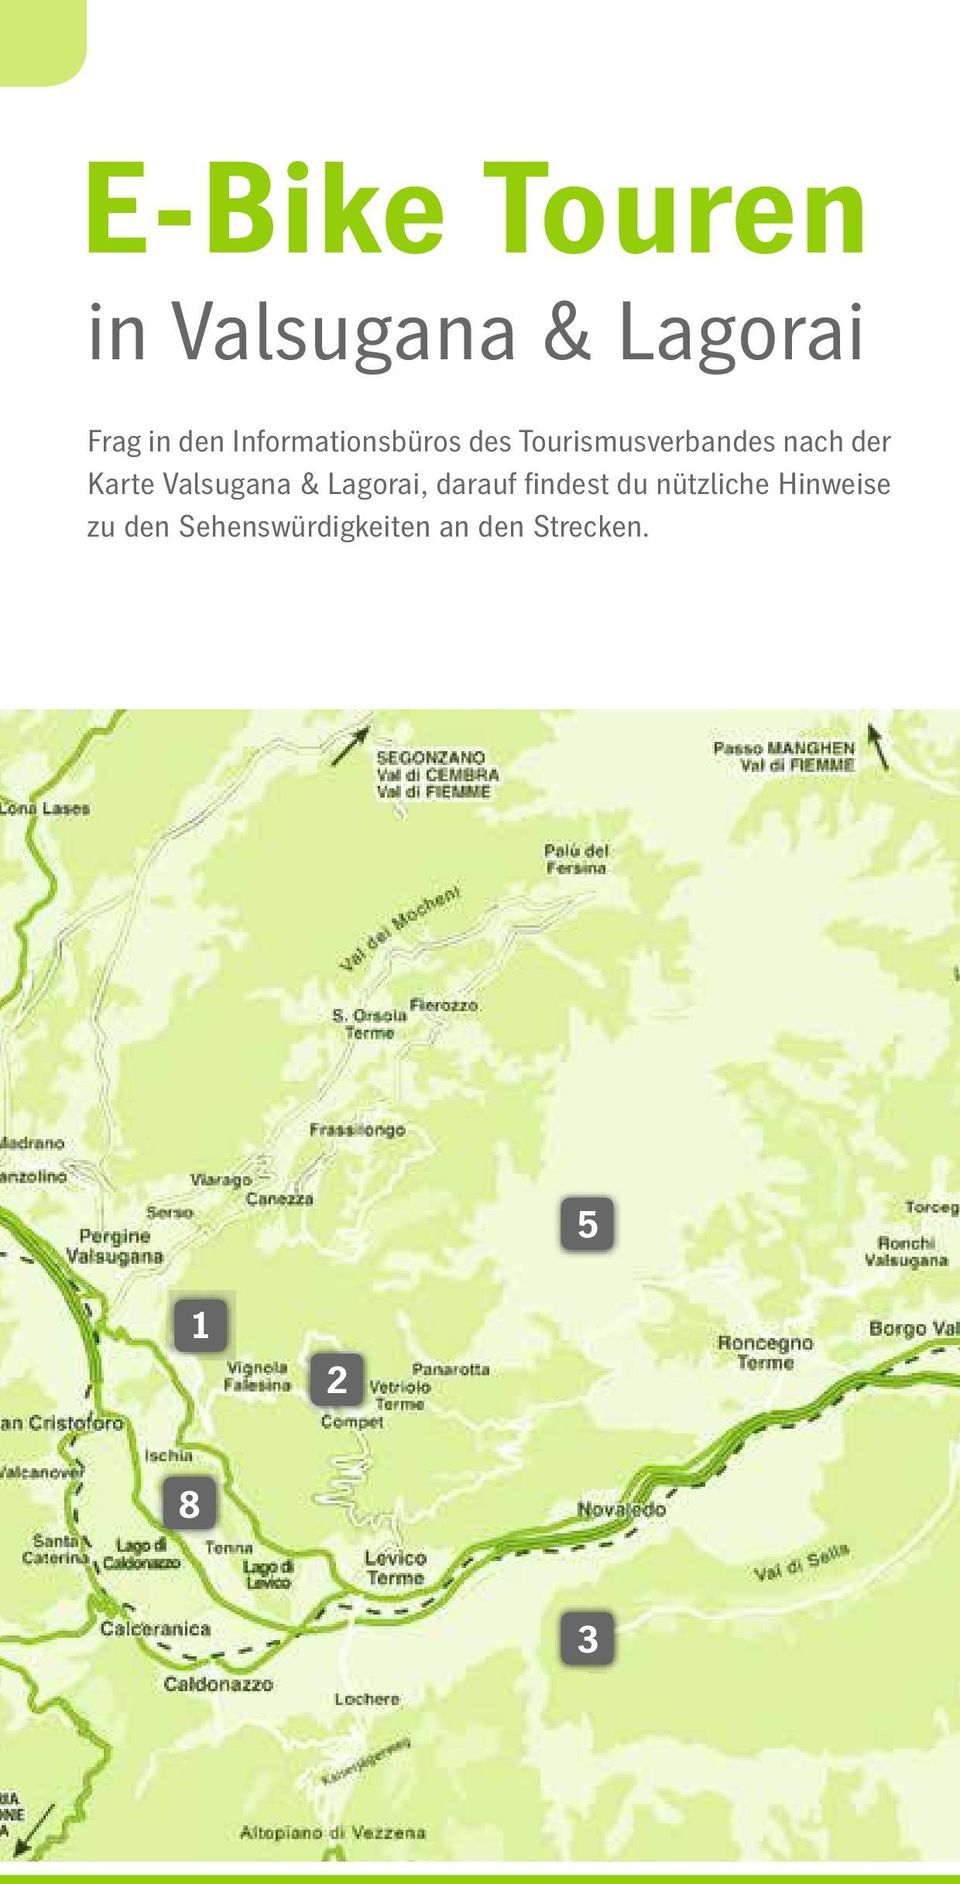 Karte Valsugana & Lagorai, darauf findest du